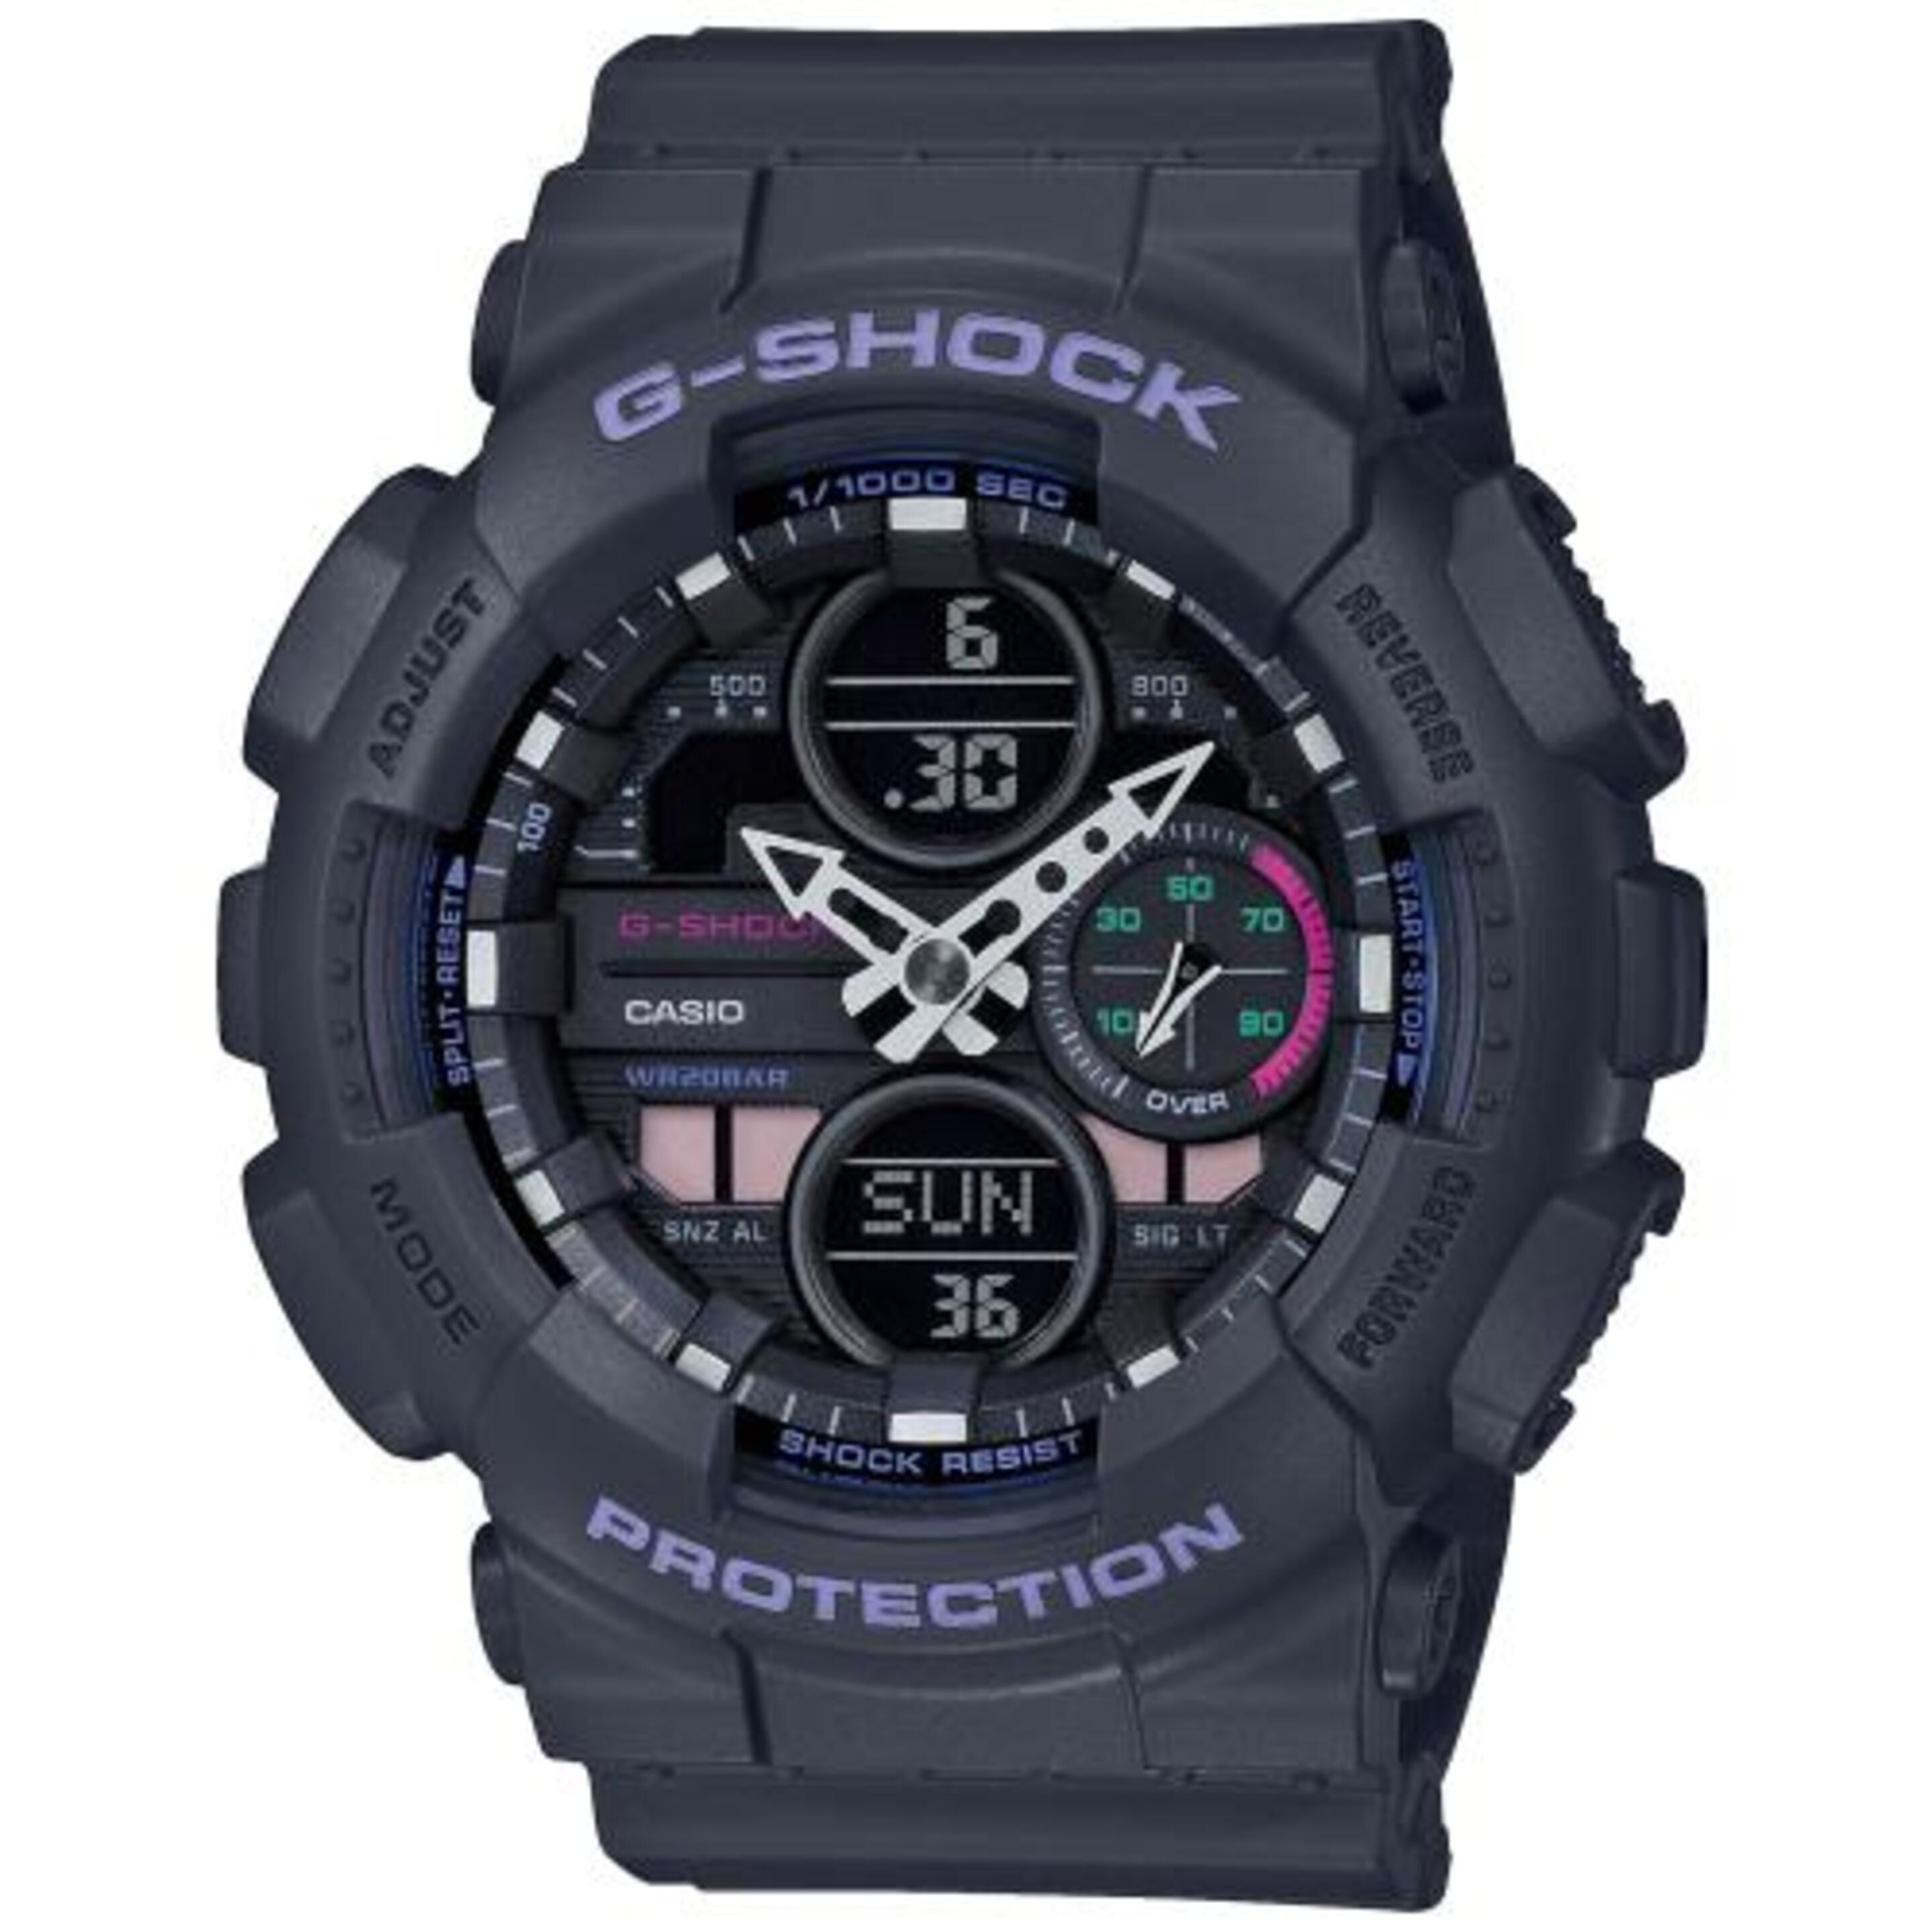 Reloj Casio G-shock Gma-s140-8aer